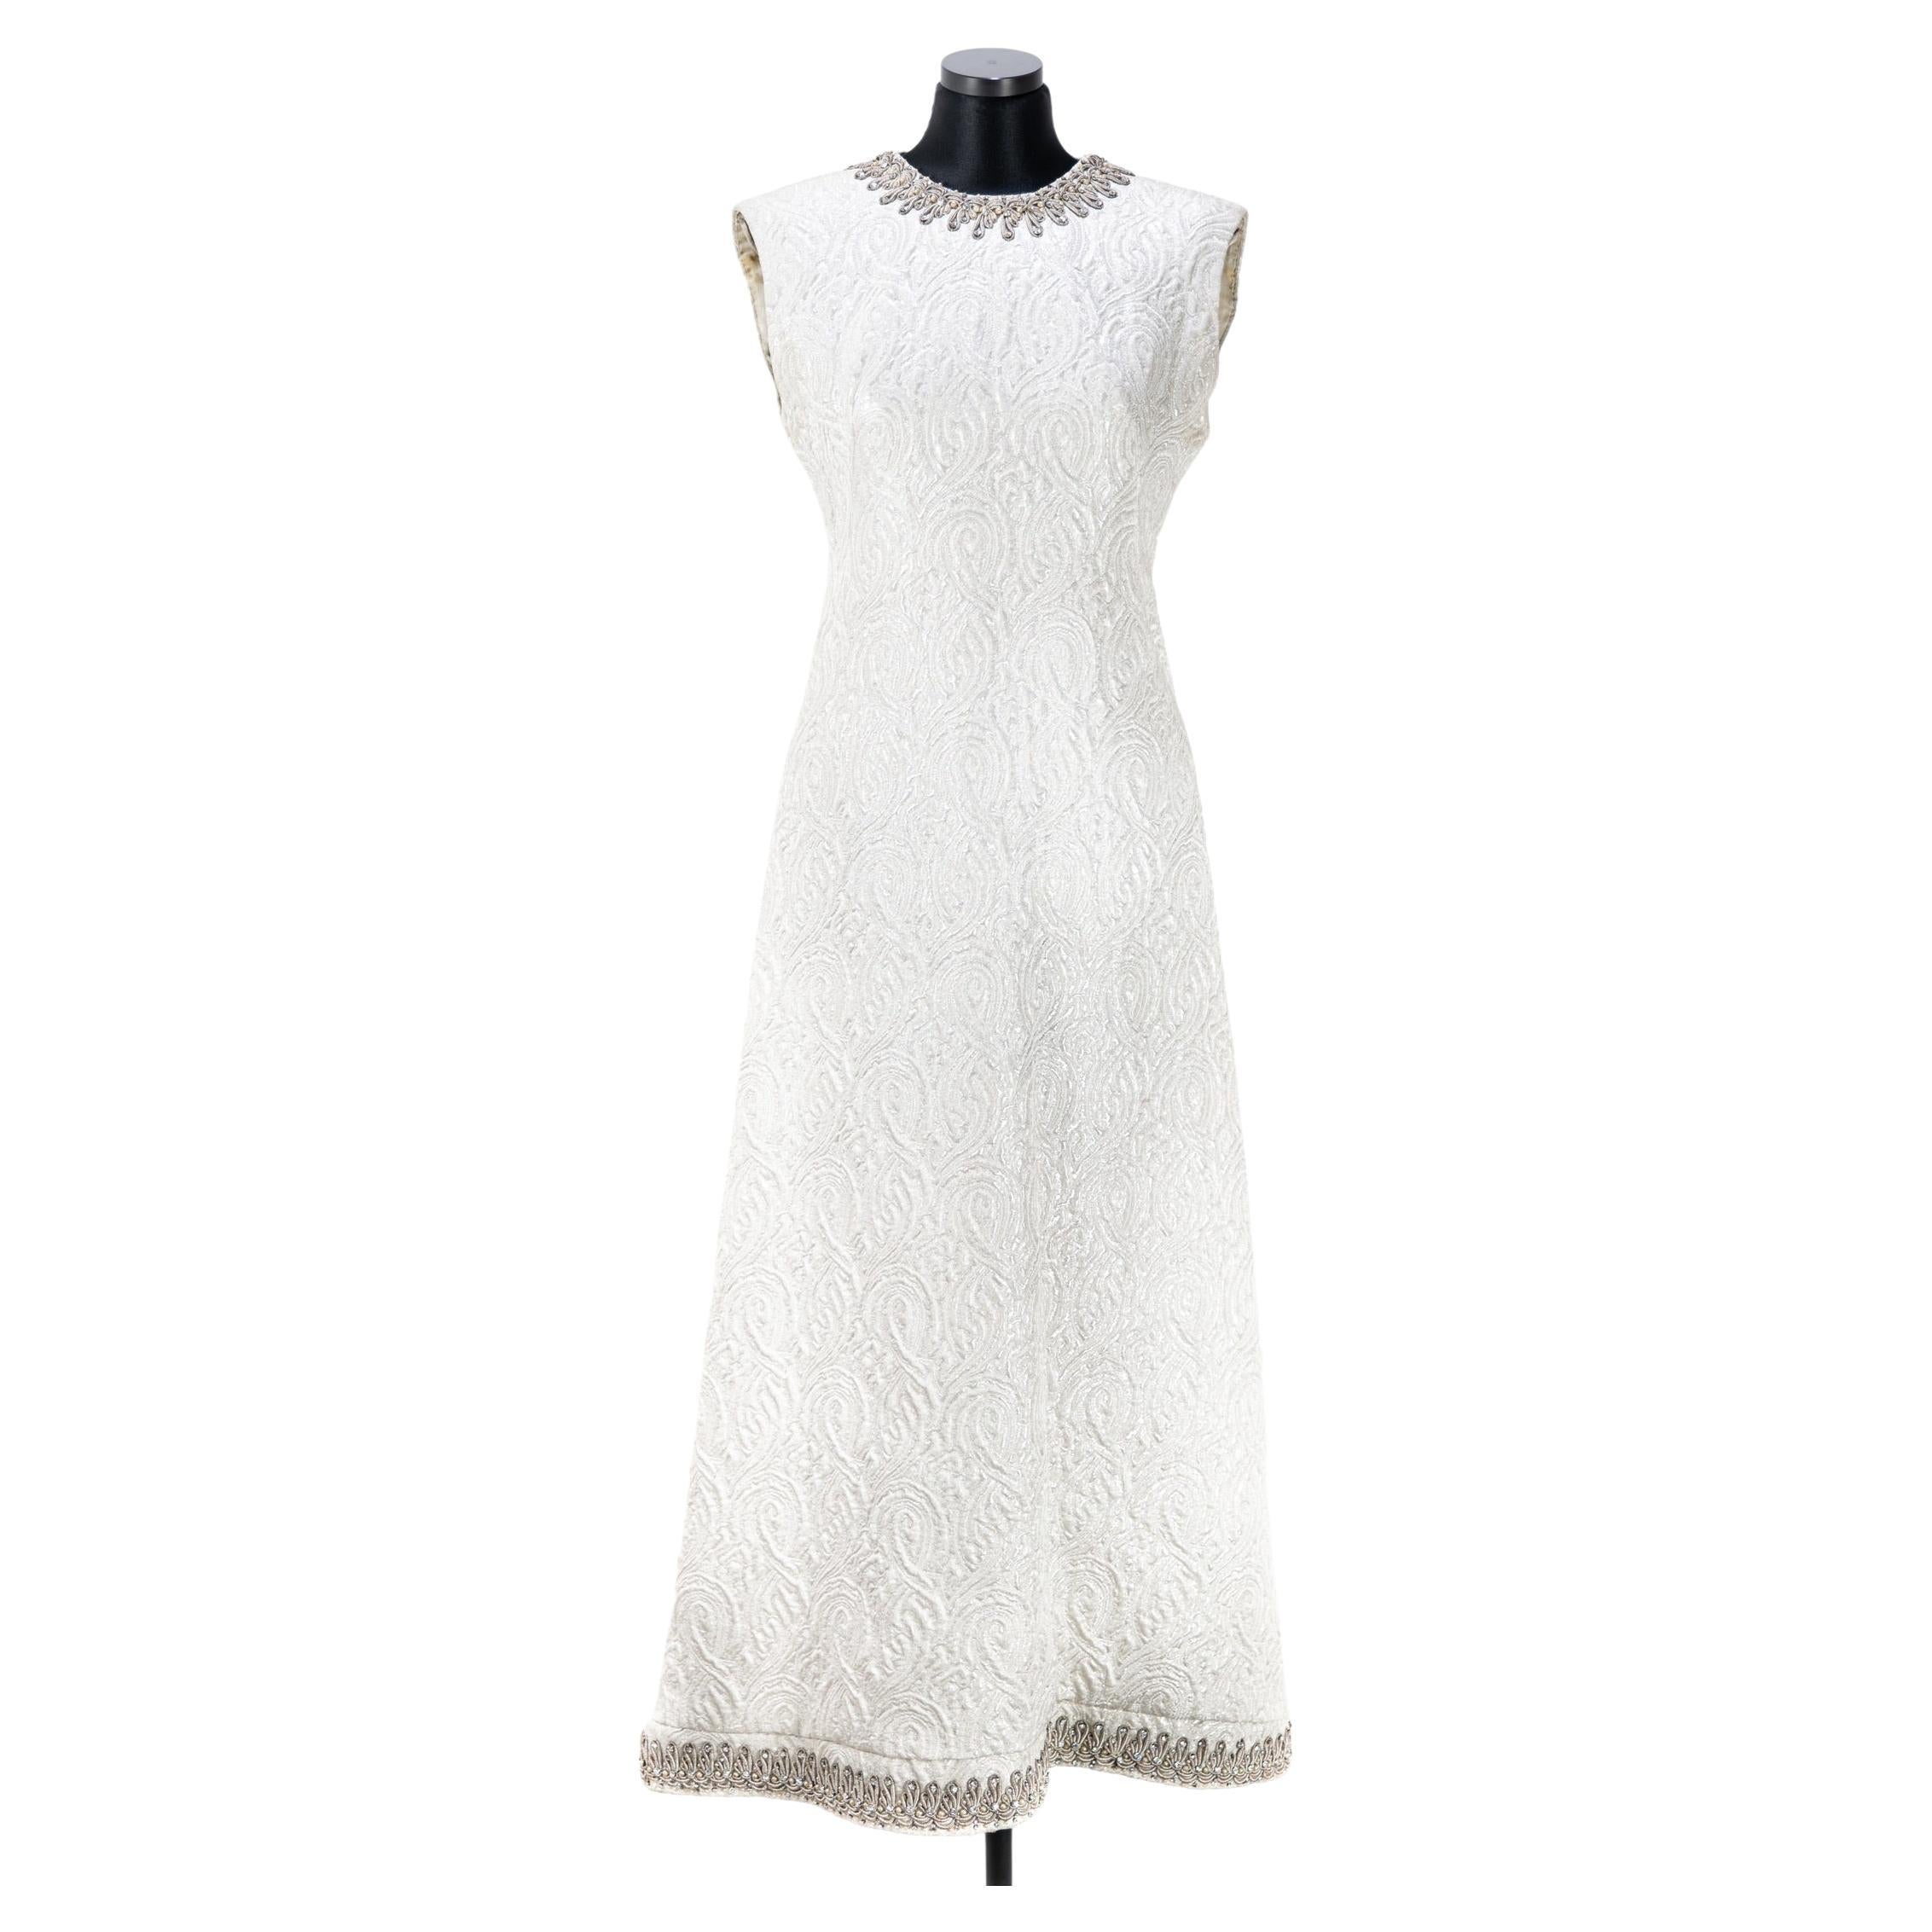 Vintage damask white Dress